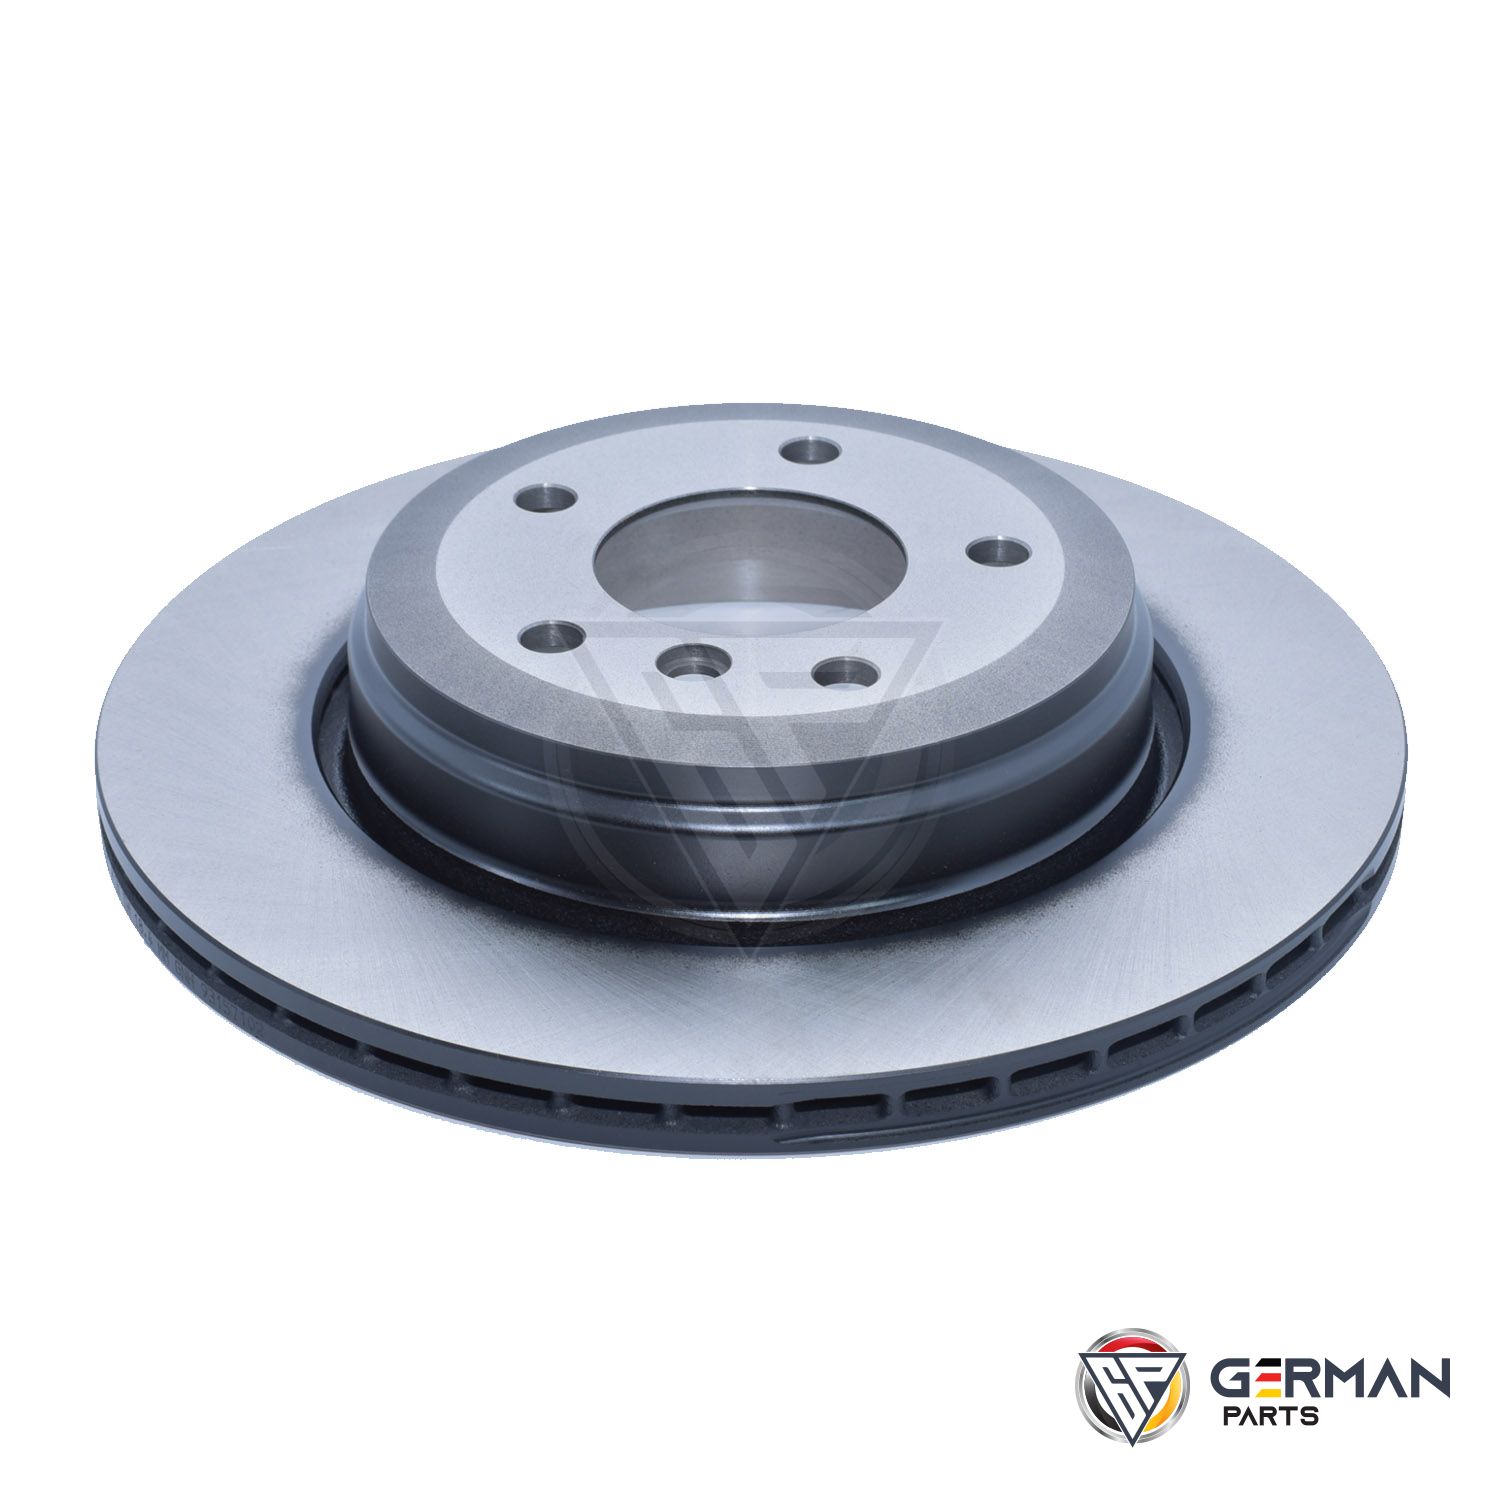 Buy TRW Rear Brake Disc 34216753215 - German Parts